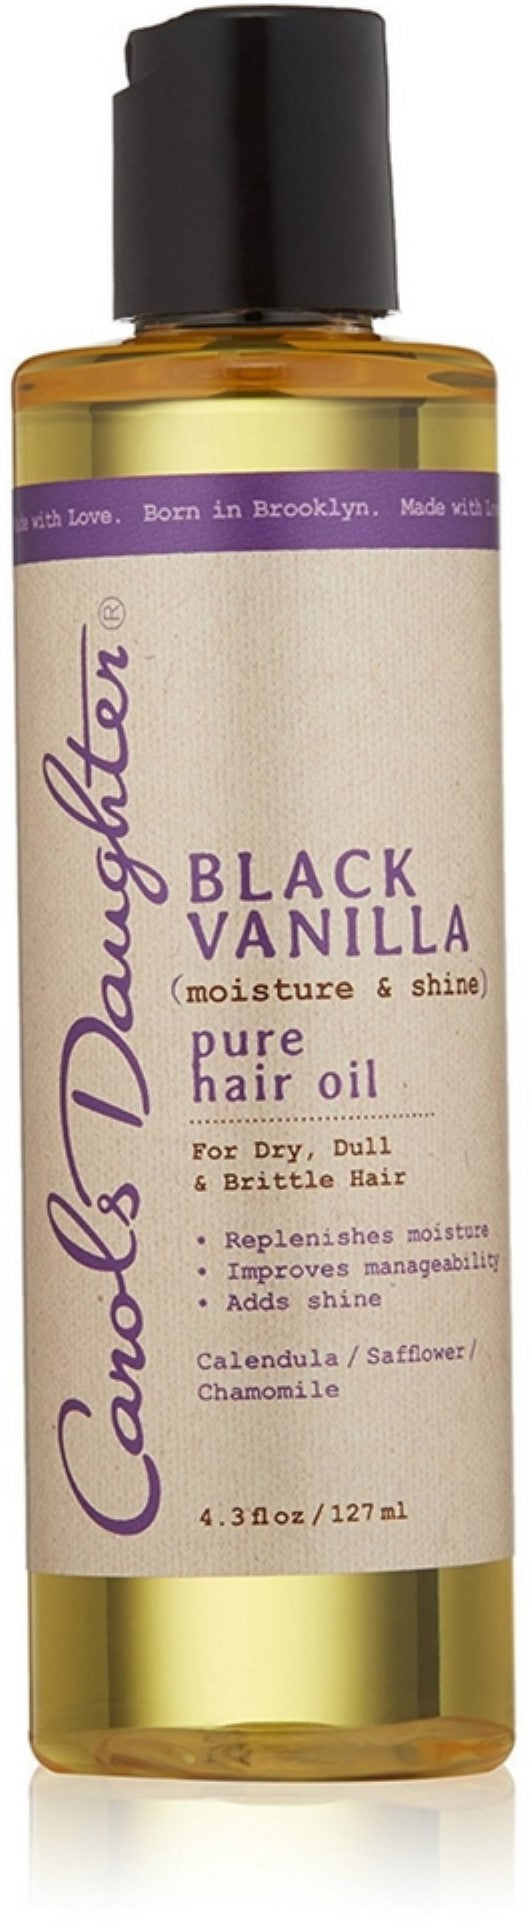 Carols Daughter Black Vanilla Moisture & Shine Pure Hair Oil 4.3 oz (Pack of 2)